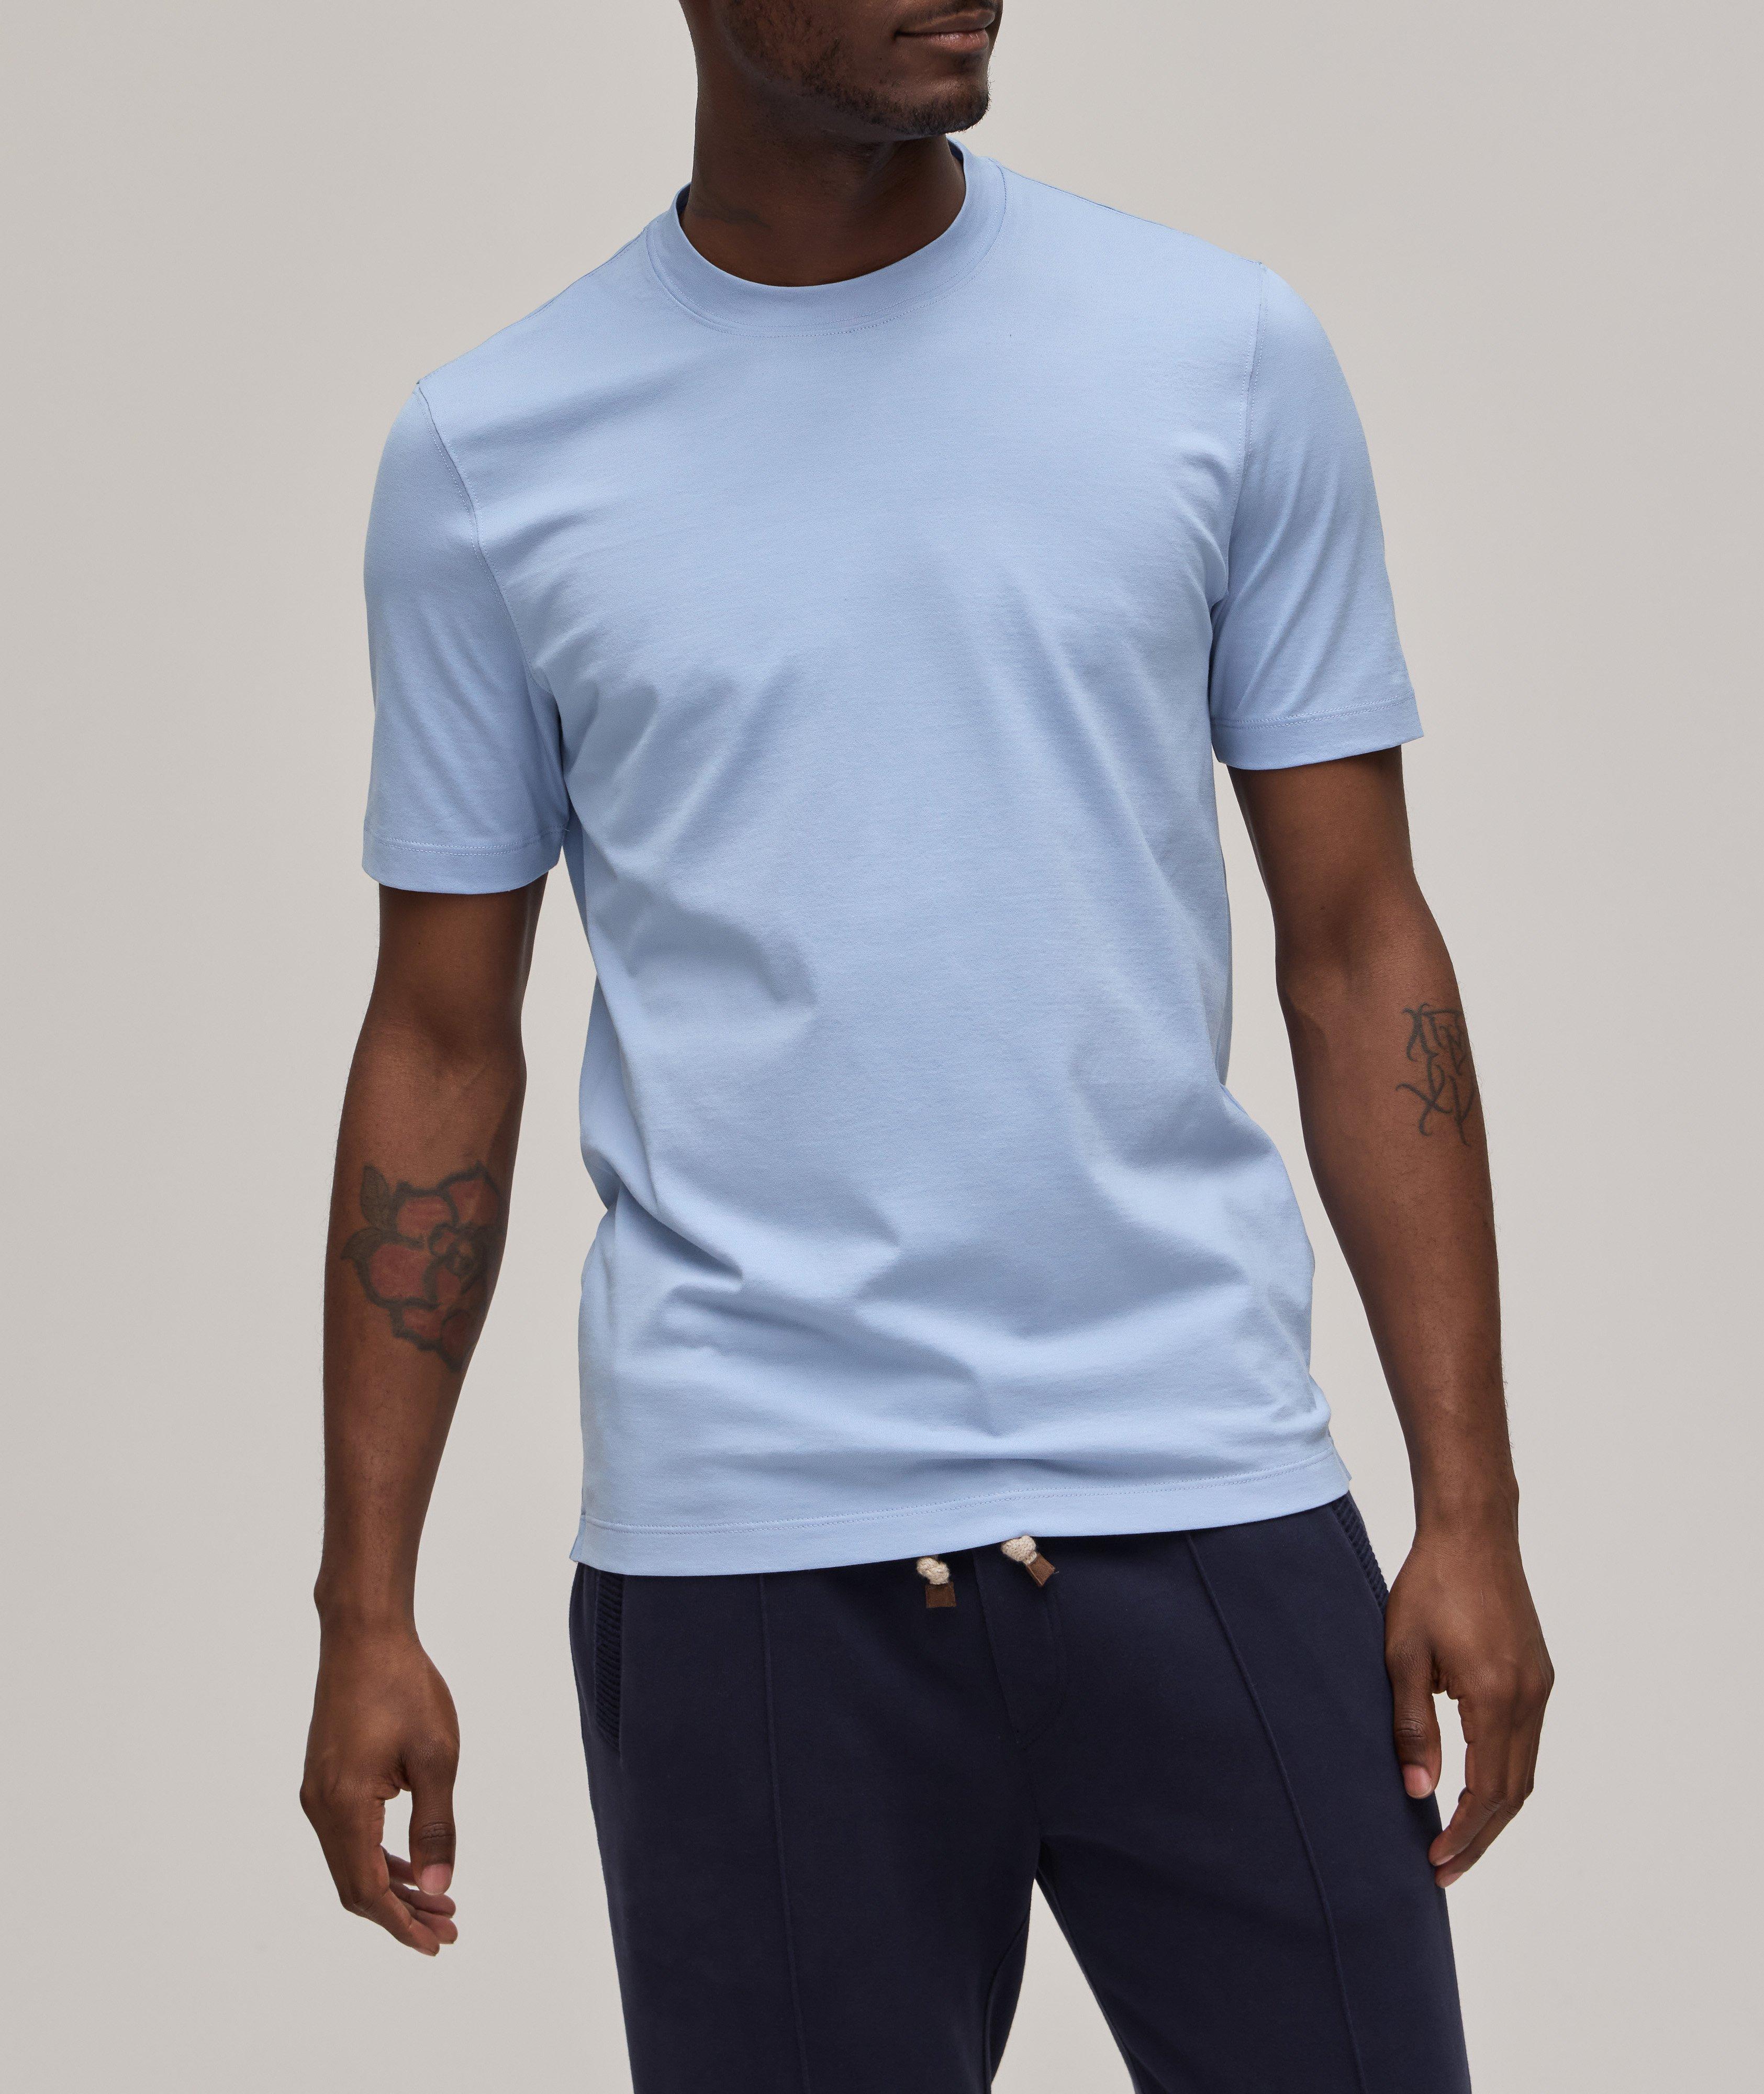 Jersey Cotton T-Shirt image 1